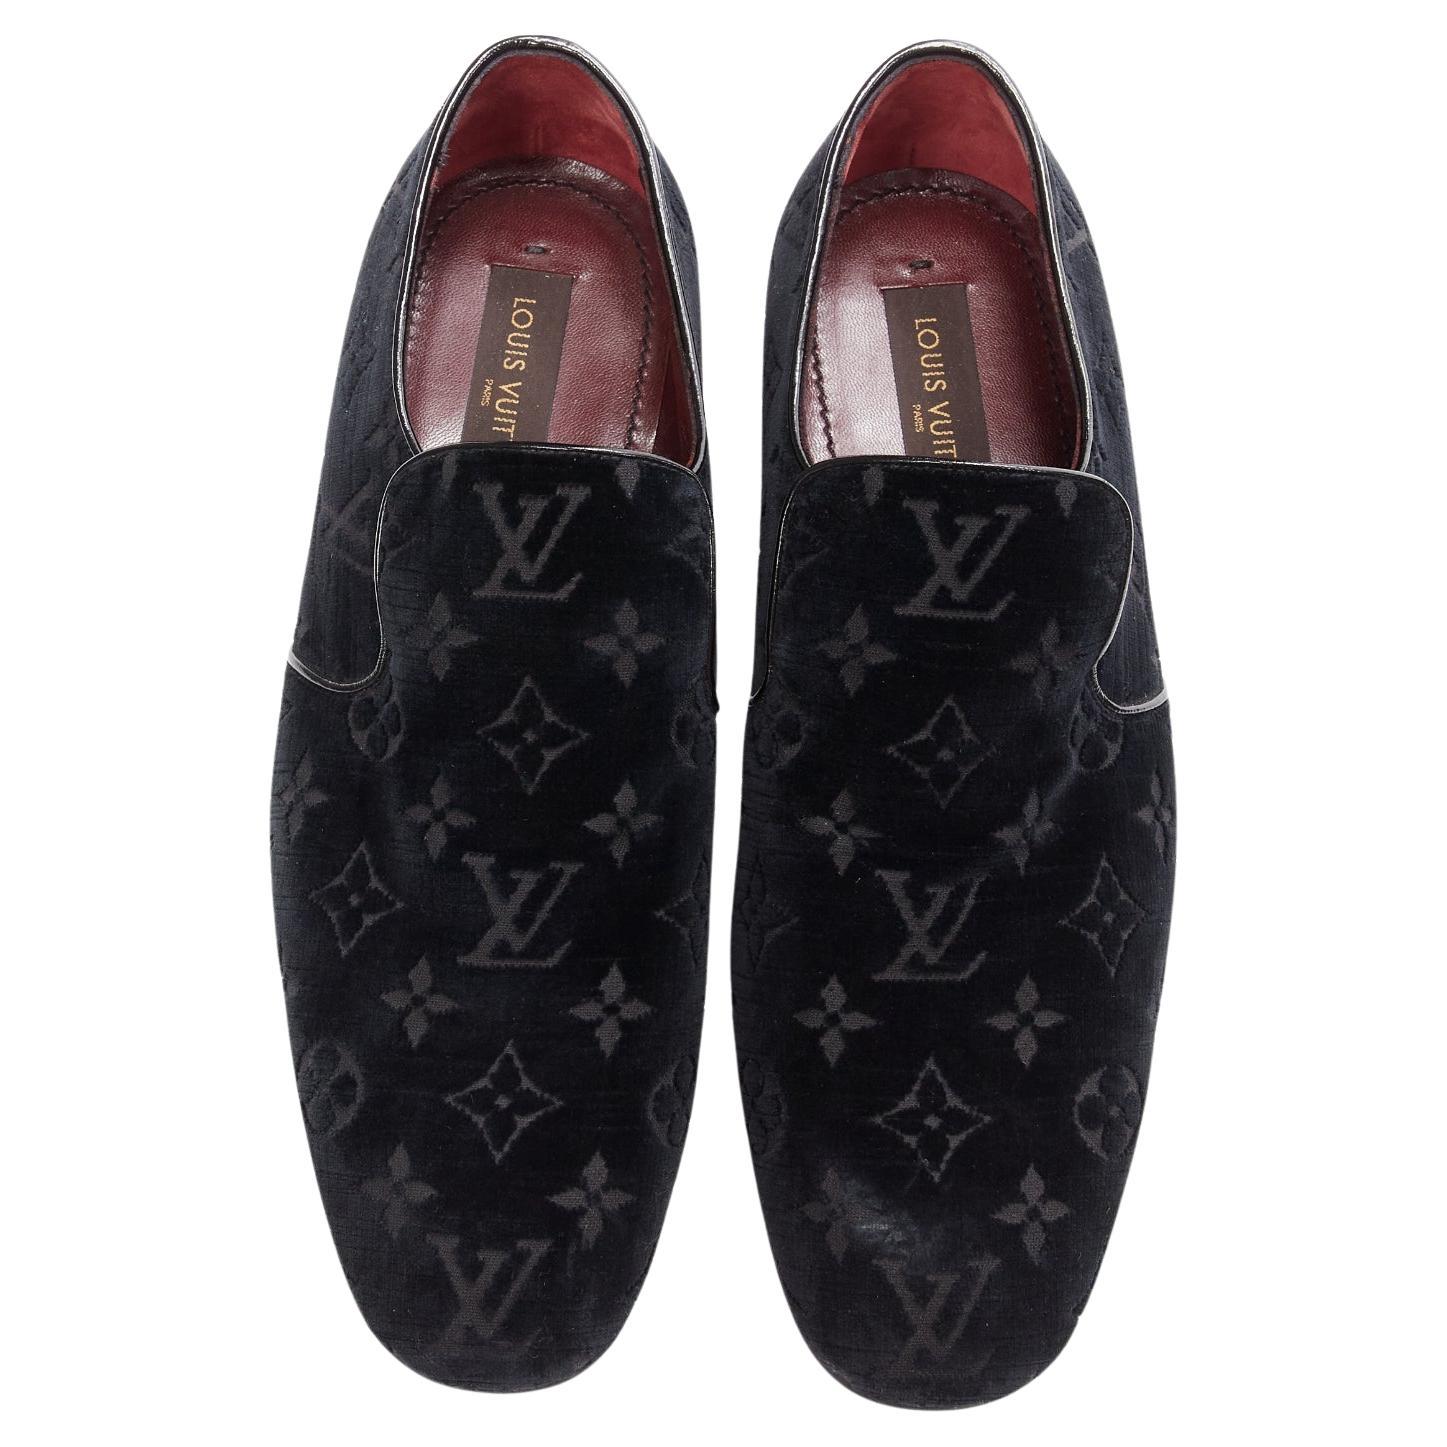 LOUIS VUITTON noir LV monogram velours Le Smoking loafer shoes UK8 EU42